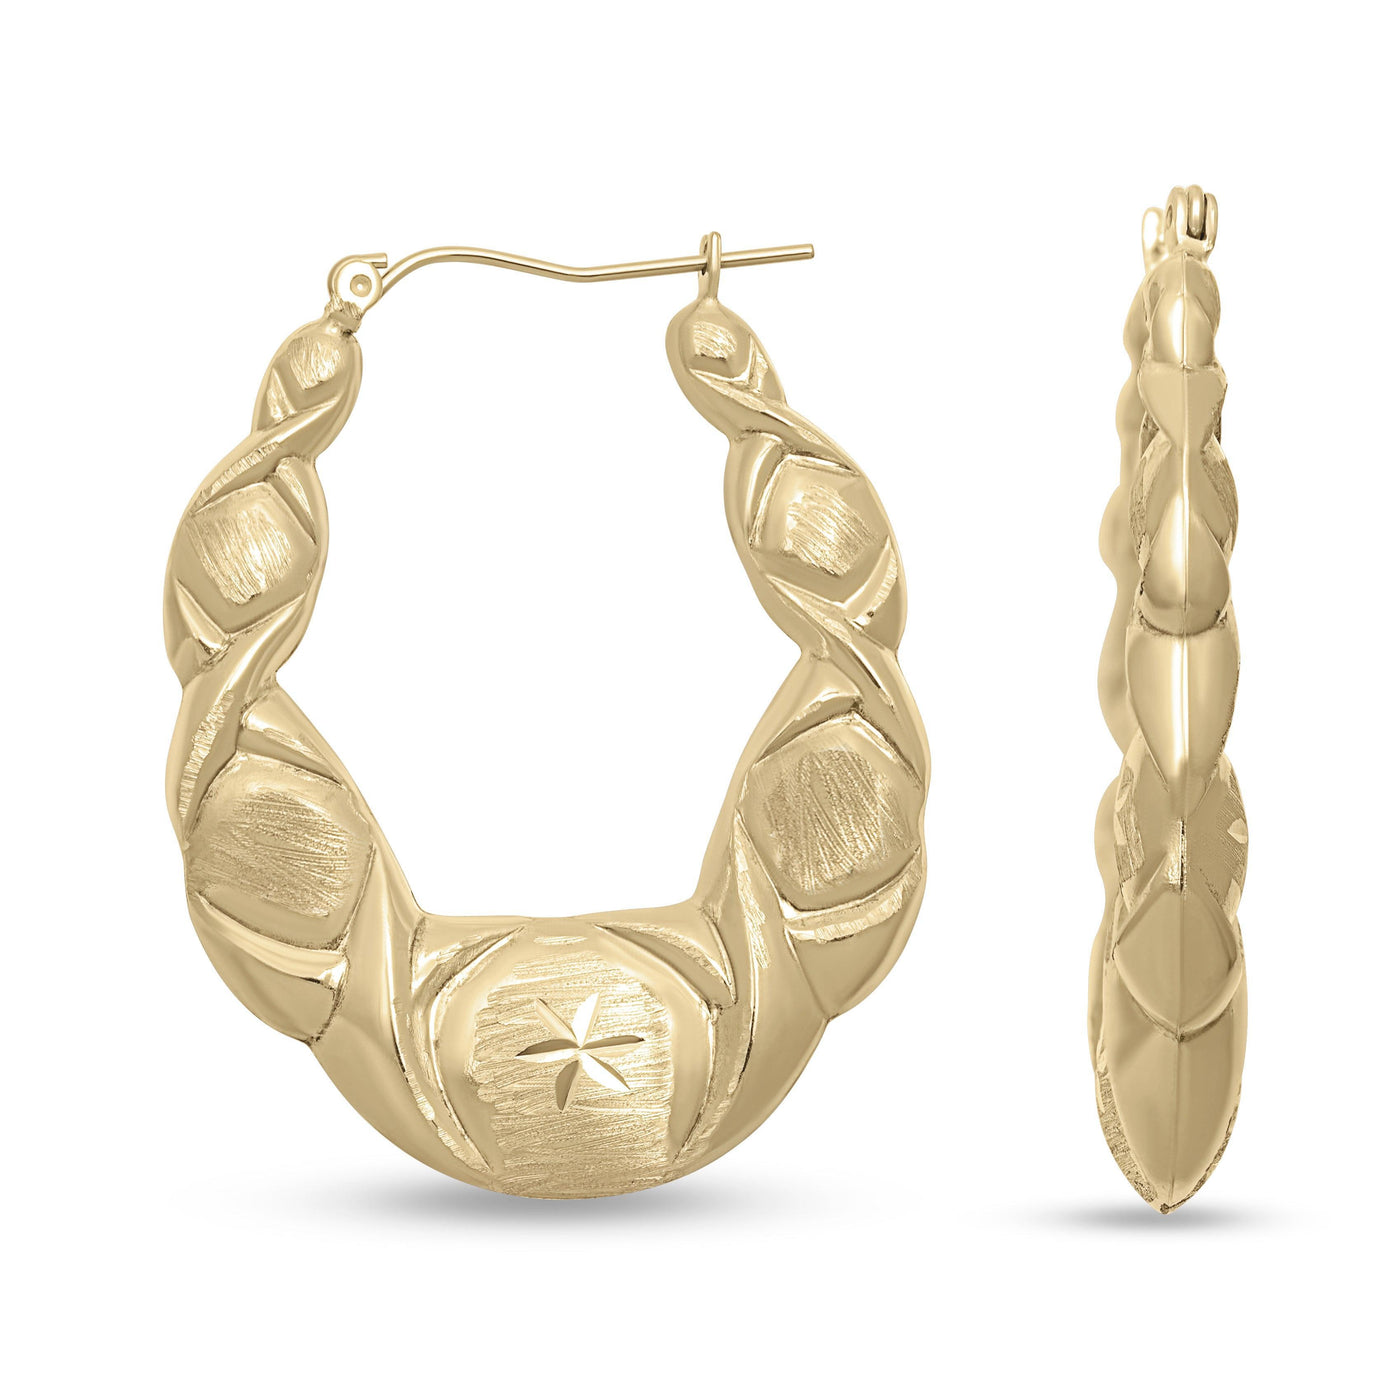 1 3/4" Diamond Cut Graduated Hoop Earrings 14K Yellow Gold - bayamjewelry